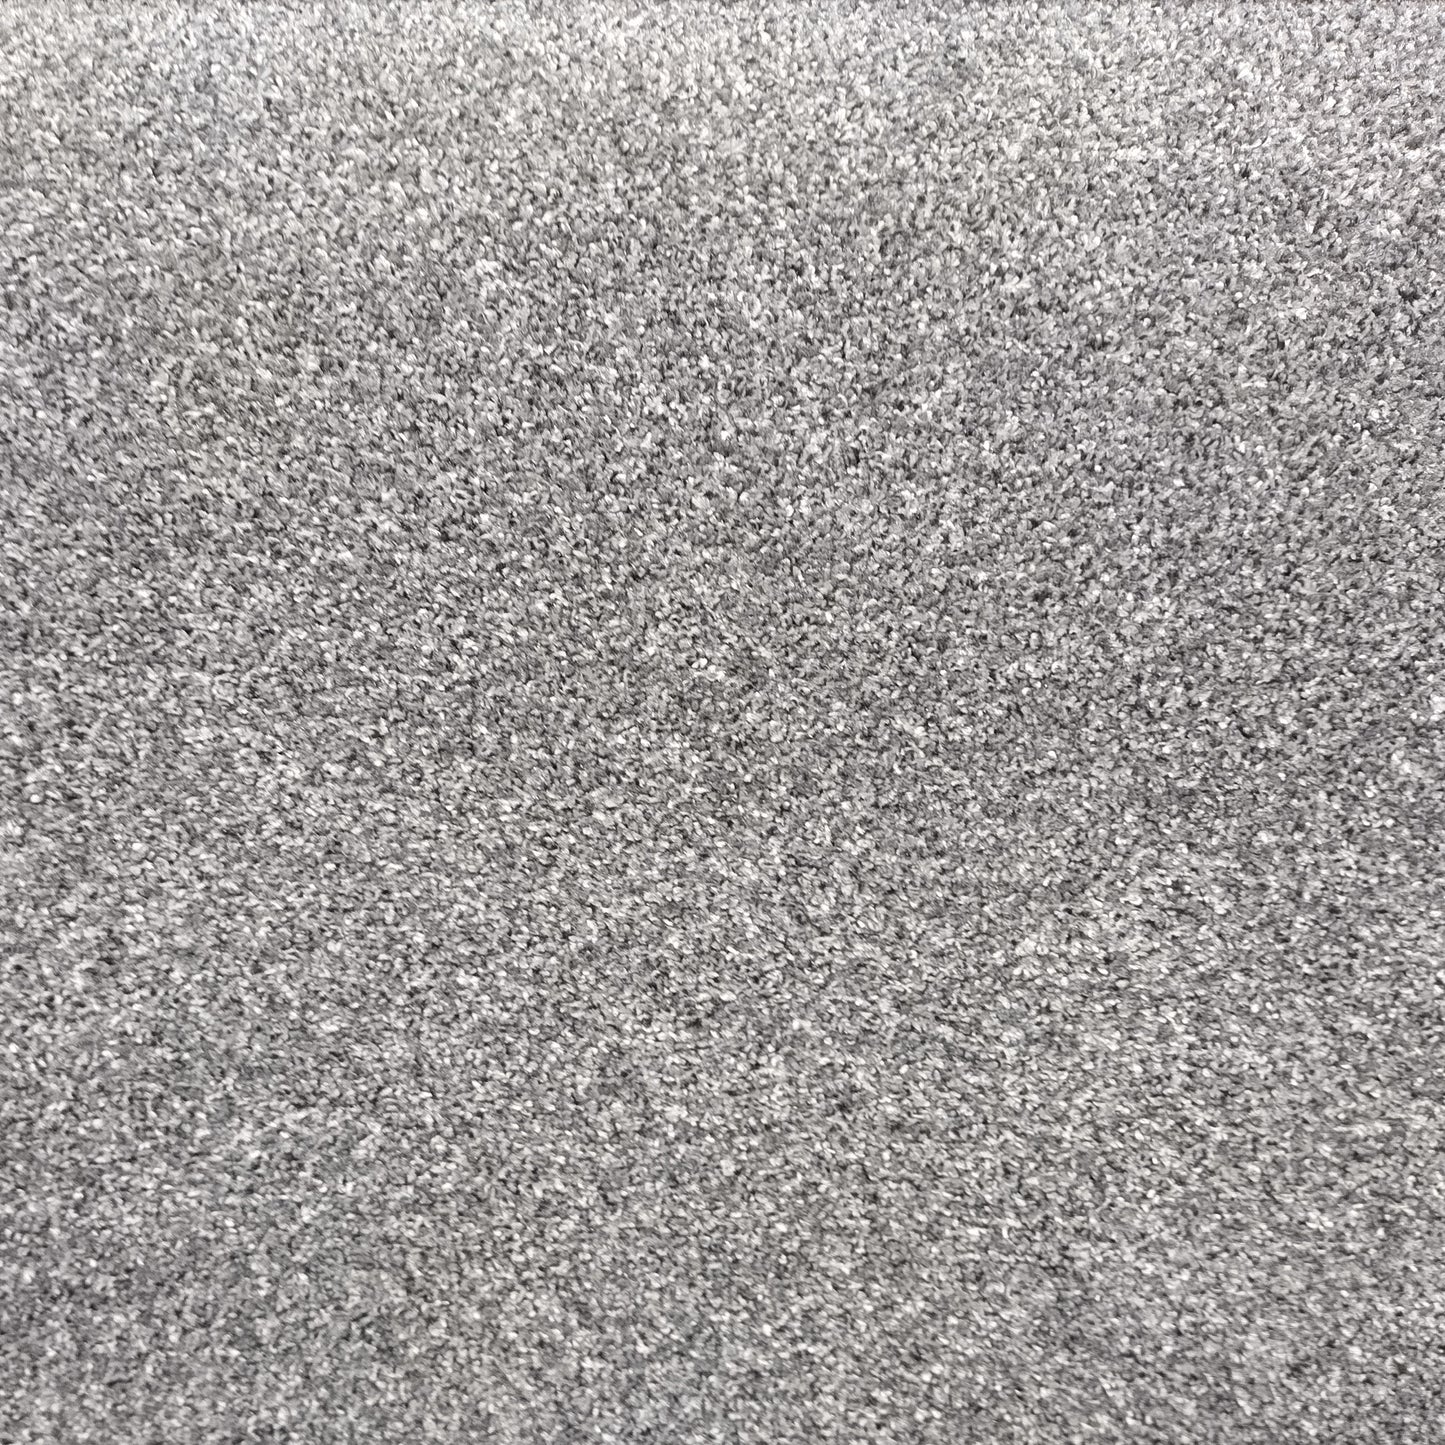 Fairway Grey Wolf 4.6 x 4 m Roll End Carpet